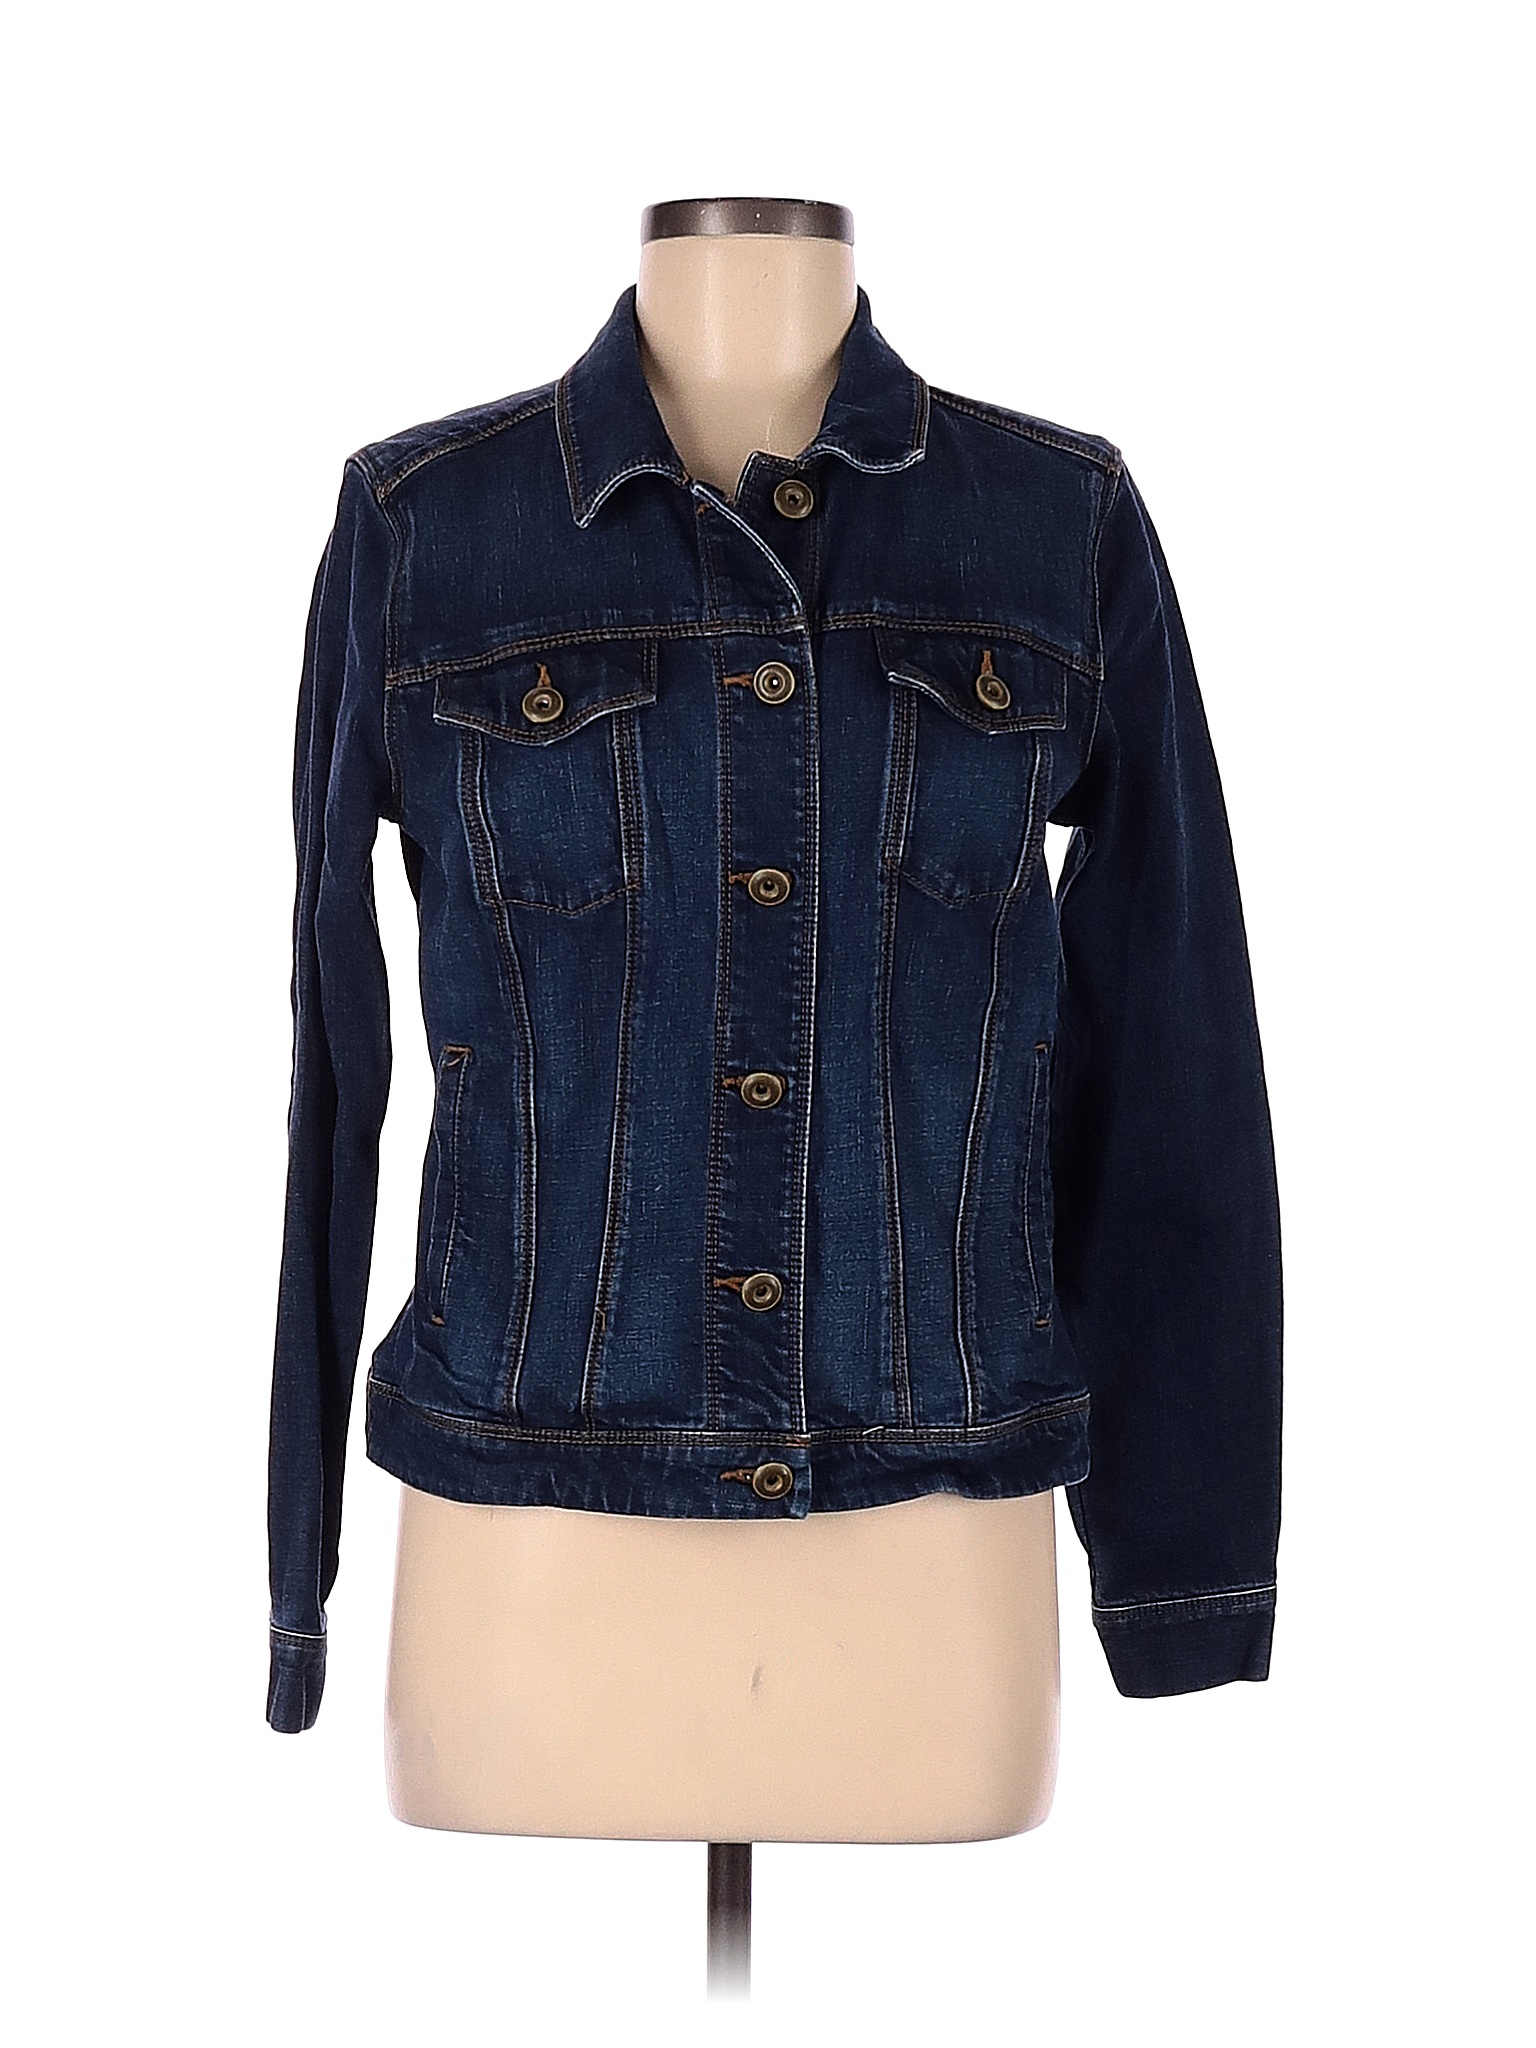 CAbi 100% Cotton Solid Blue Denim Jacket Size M - 74% off | thredUP